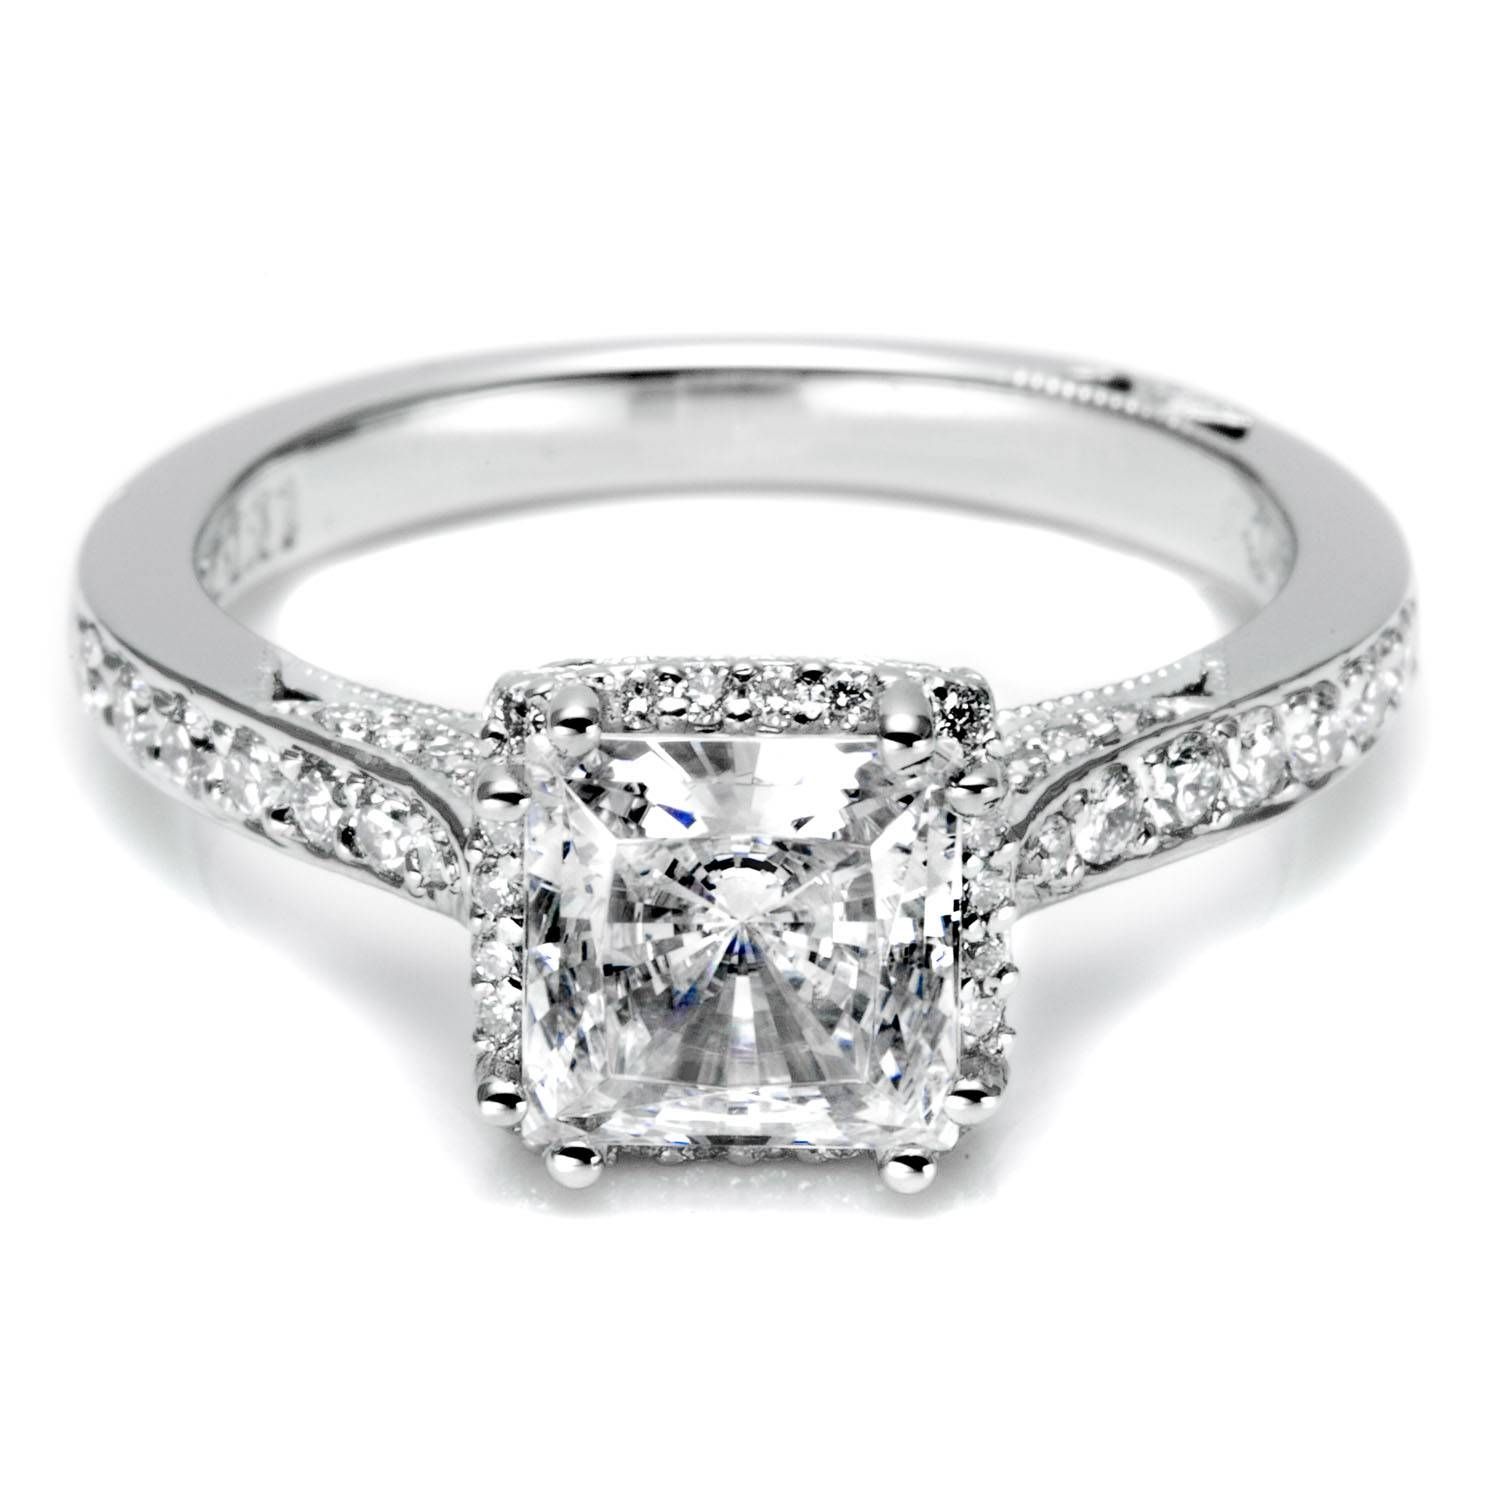 Wedding Rings For Women Princess Cut : Beautiful Princess Cut Throughout Princess Cut Diamond Wedding Rings For Women (View 15 of 15)